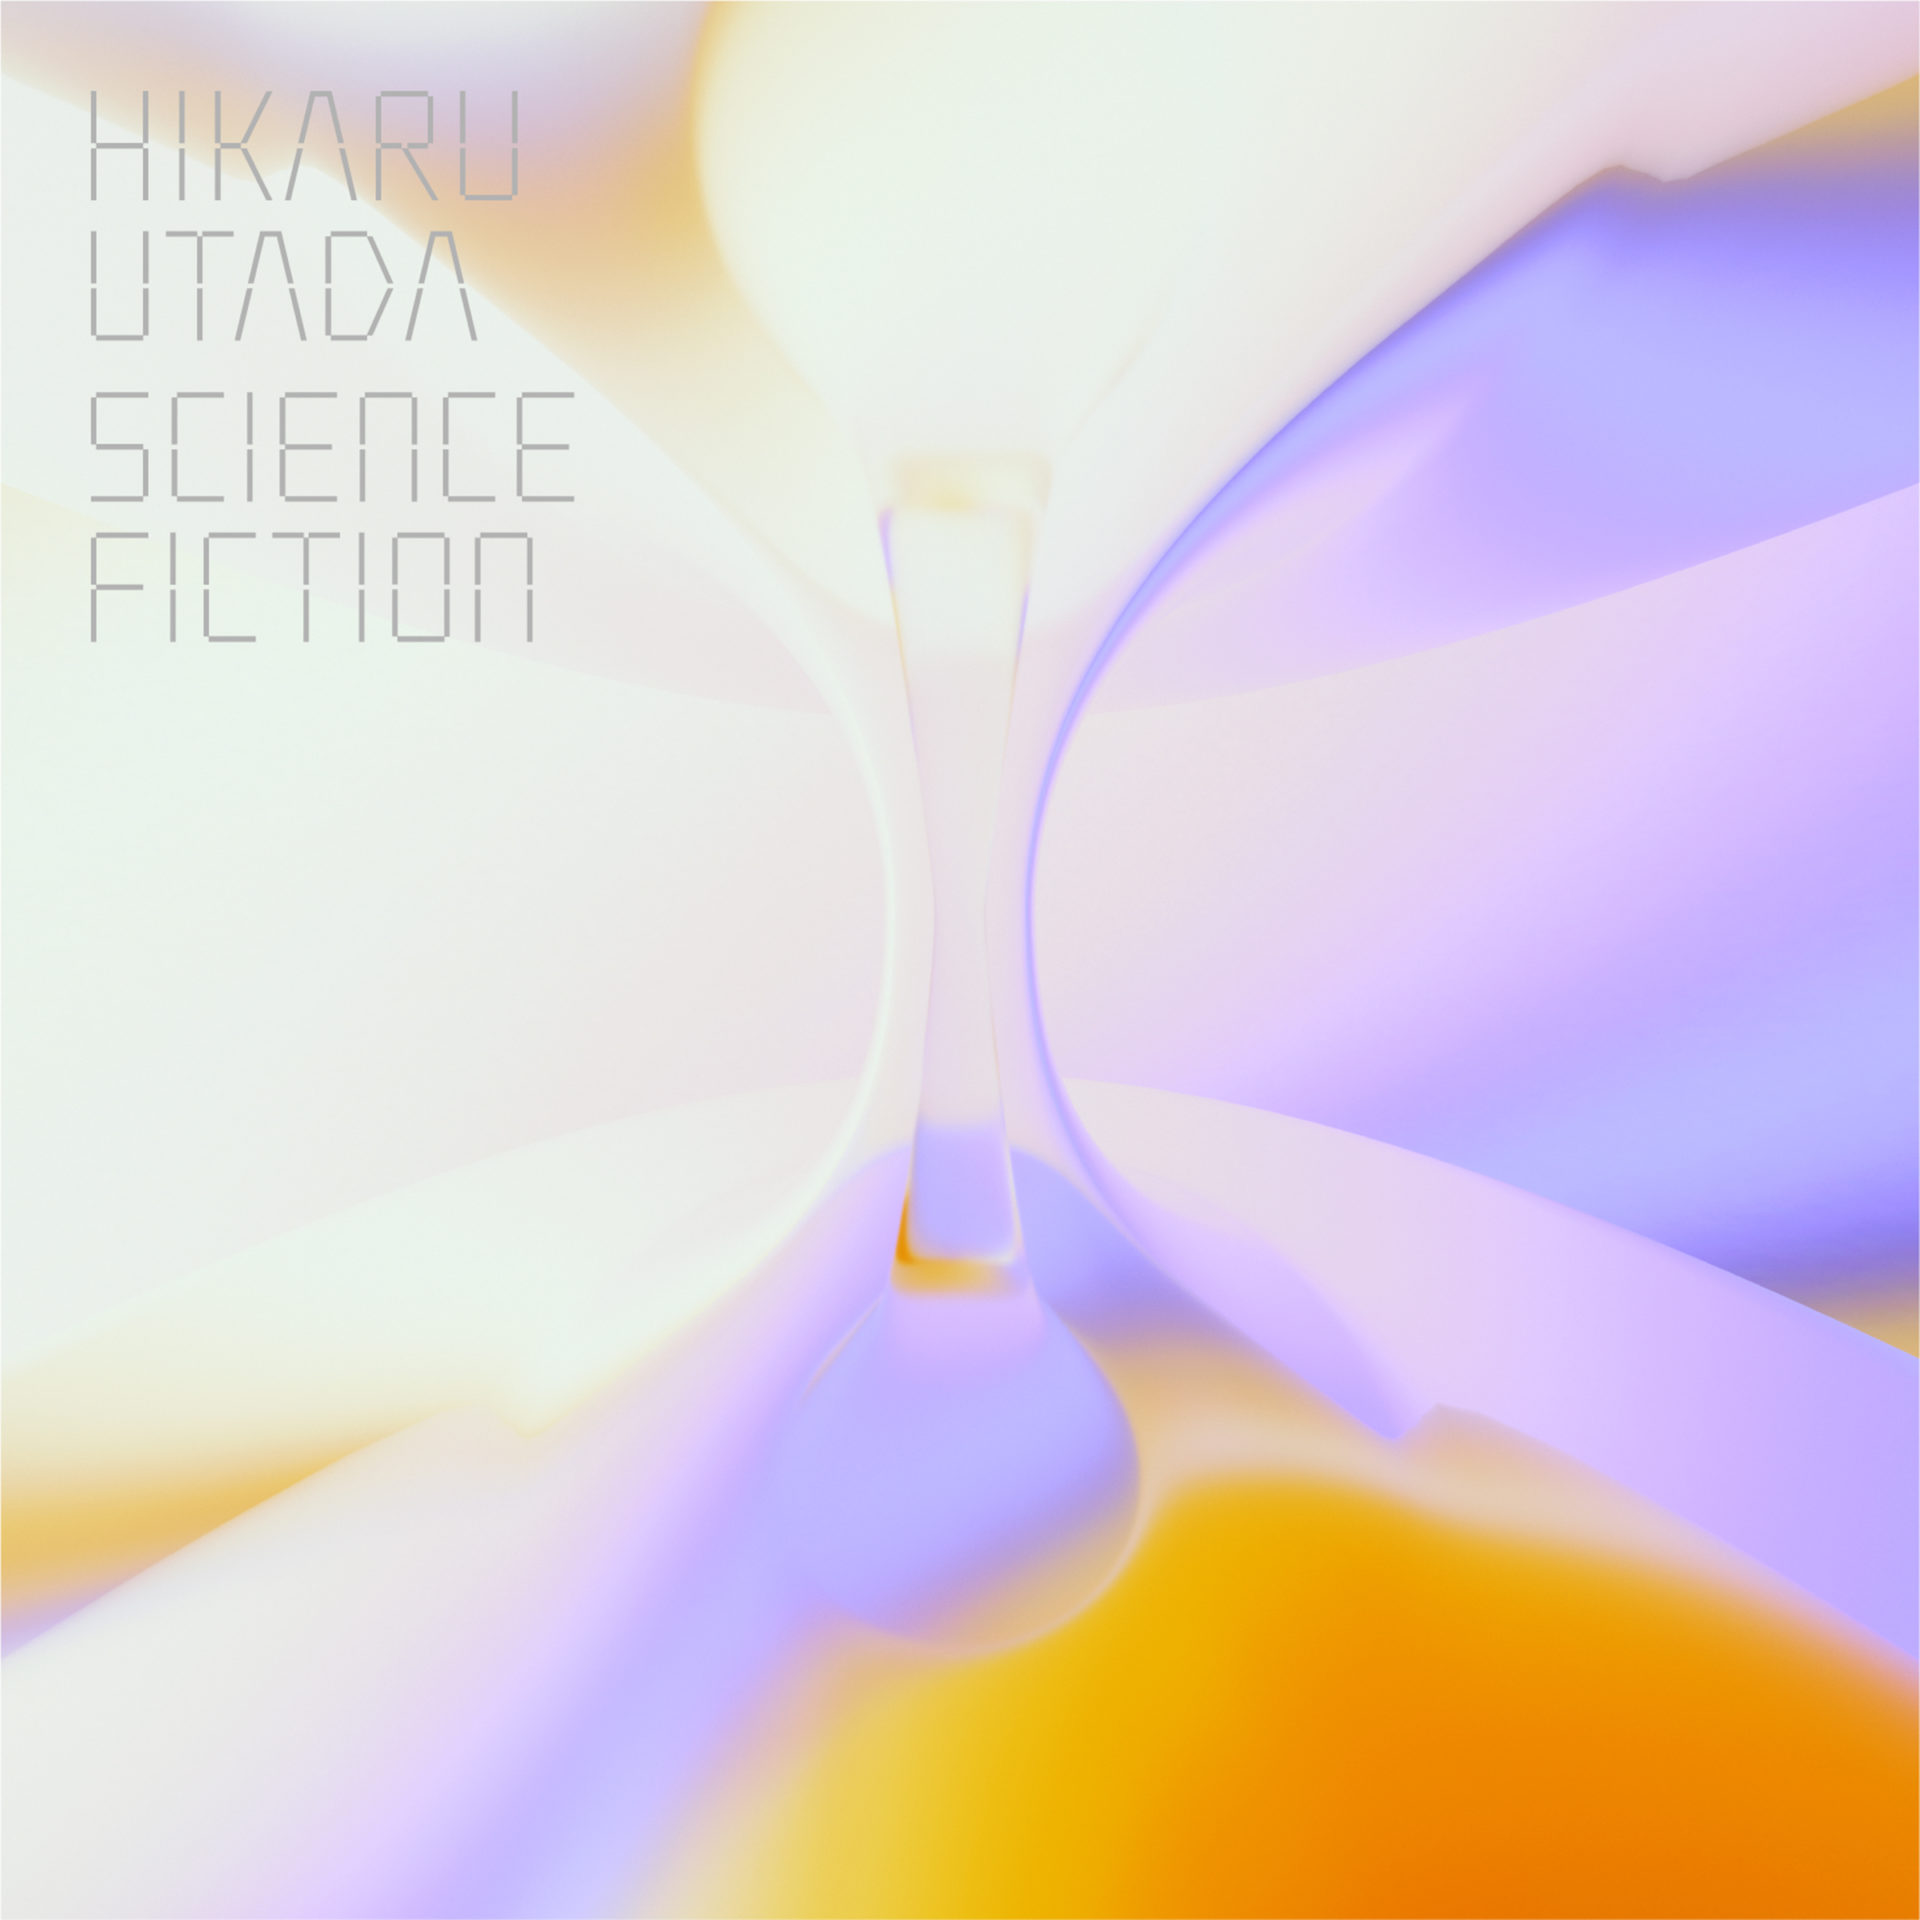 HIKARU UTADA – SCIENCE FICTION